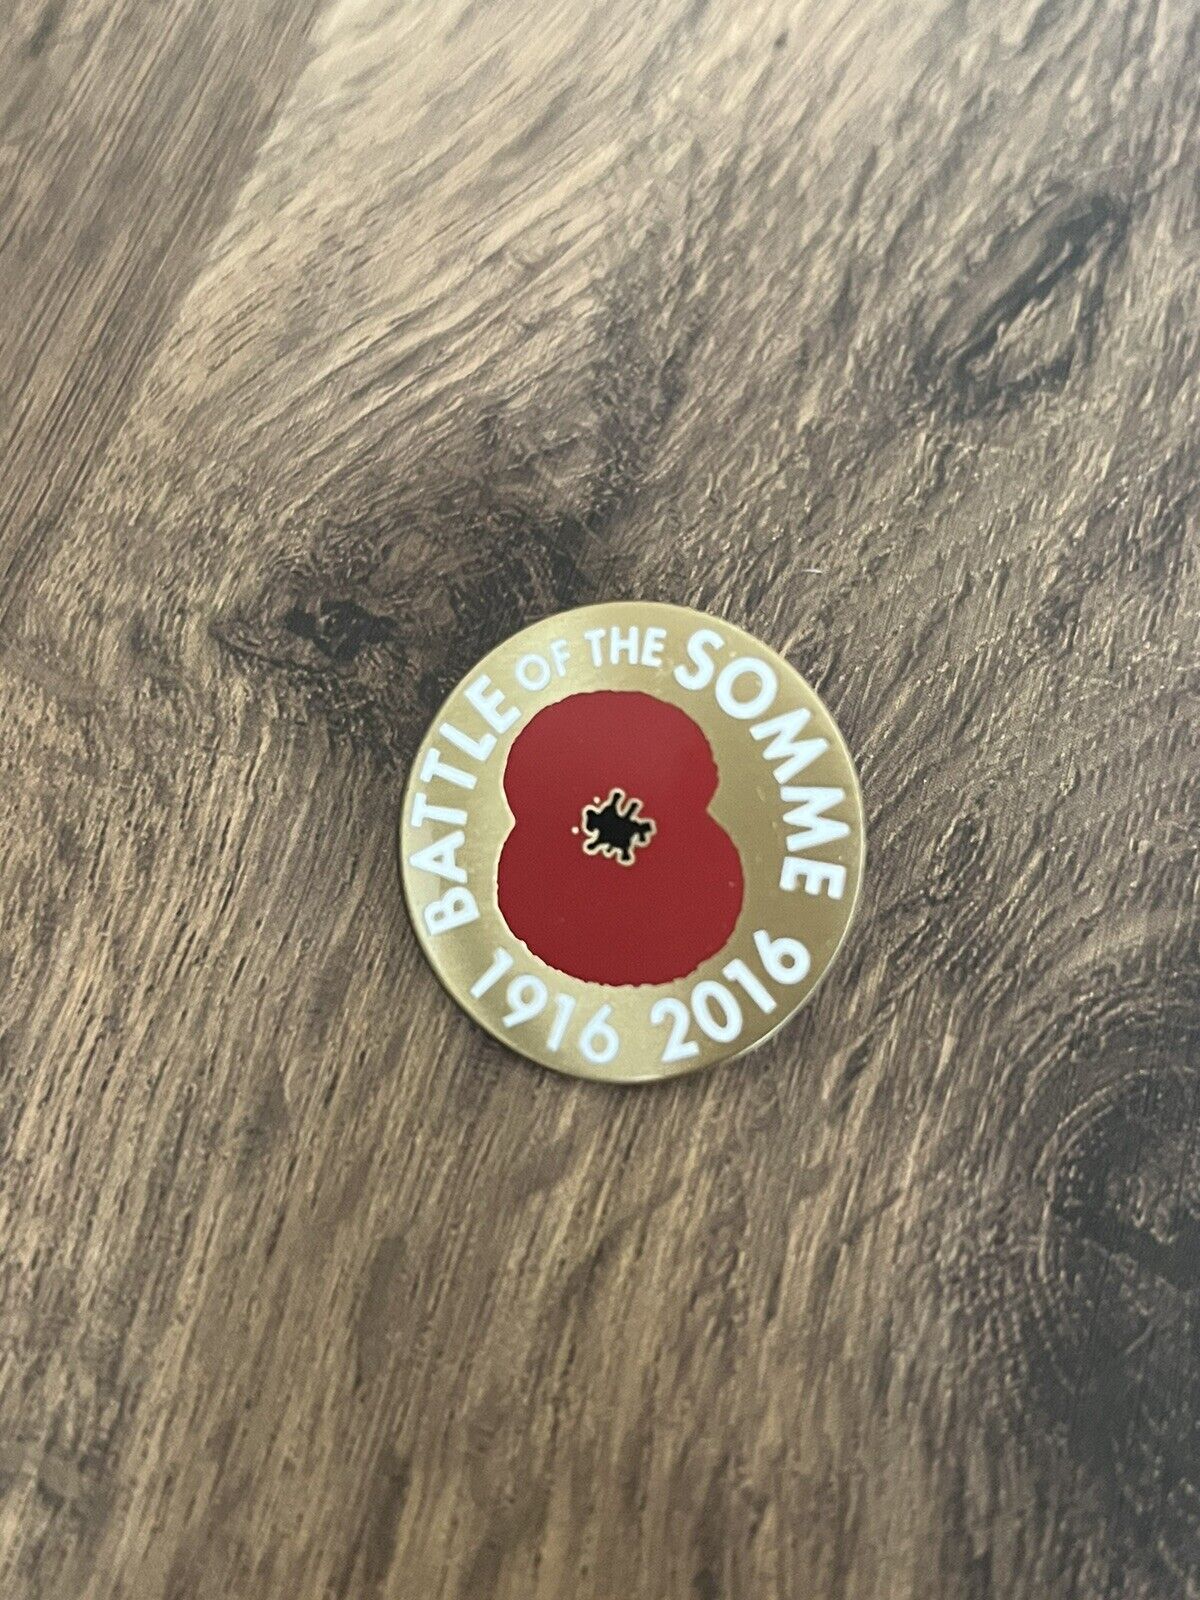 Battle of the Somme 1916 - 2016 metal & enamel pin badge